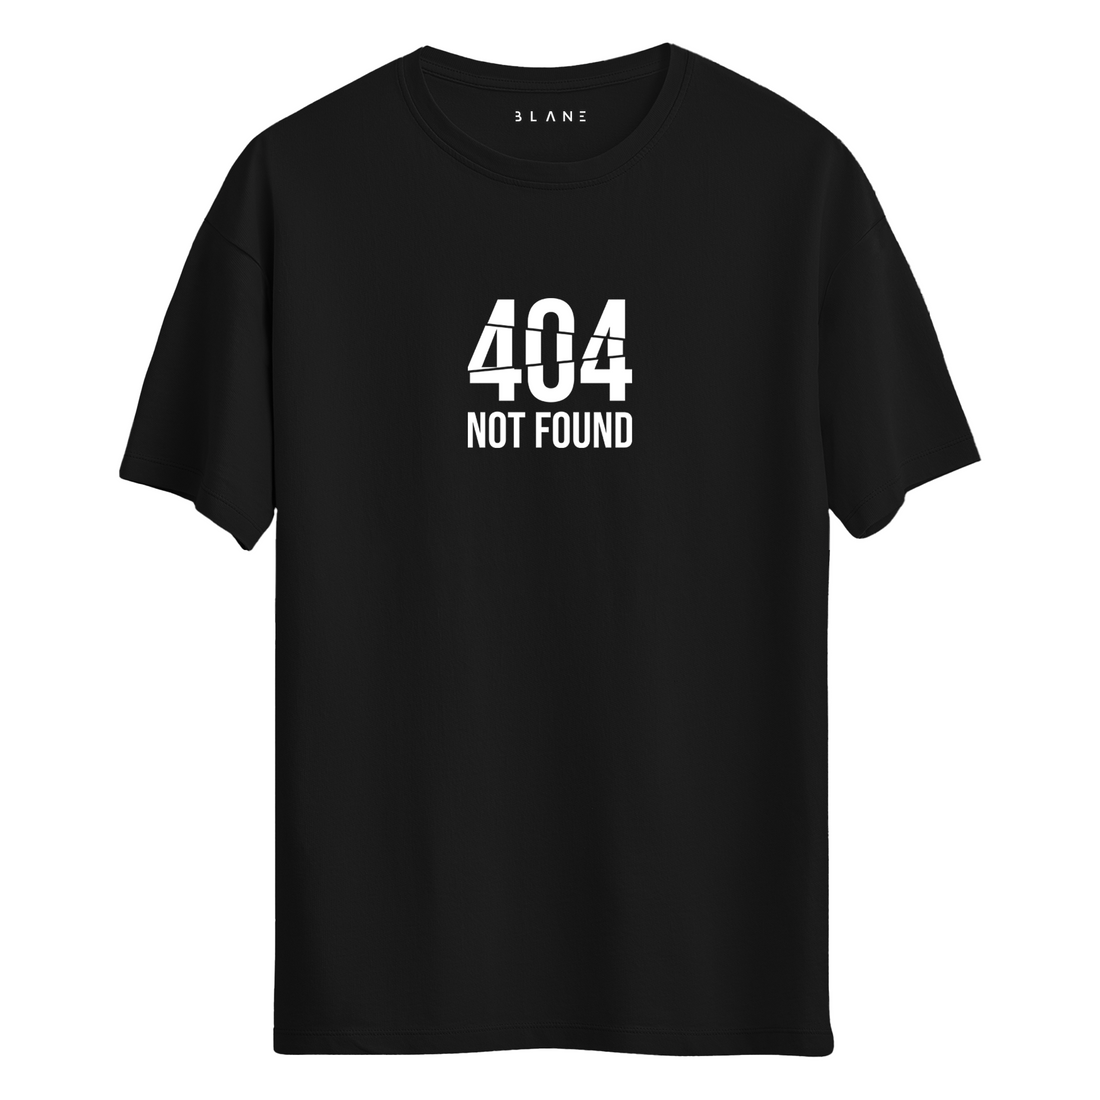 404 Not Found - T-Shirt